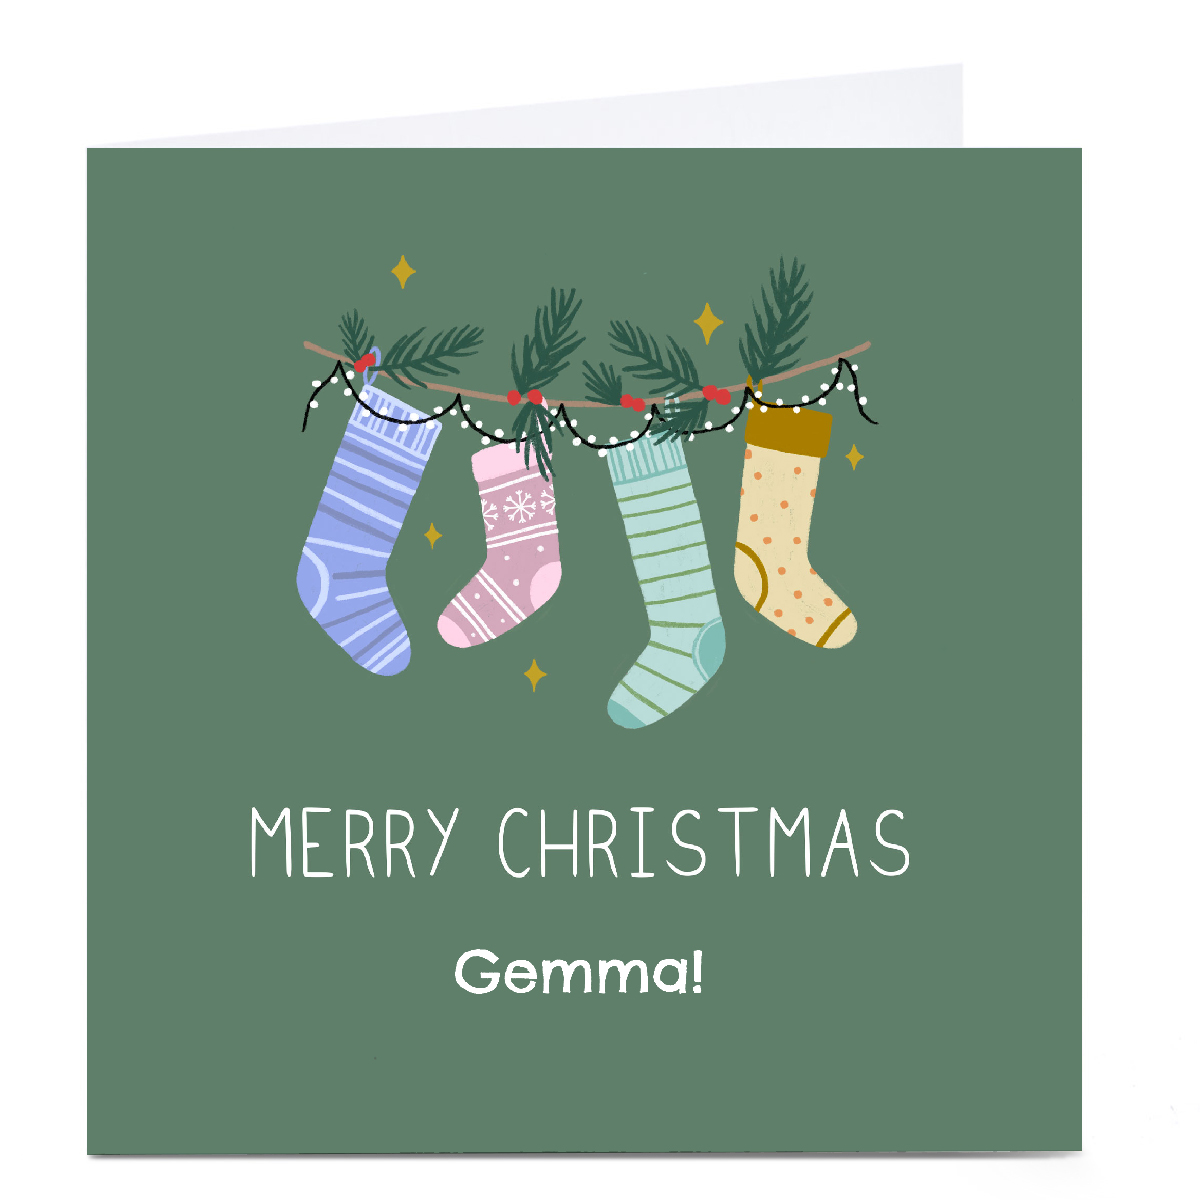 Personalised Zoe Spry Christmas Card - Stocking Merry Christmas